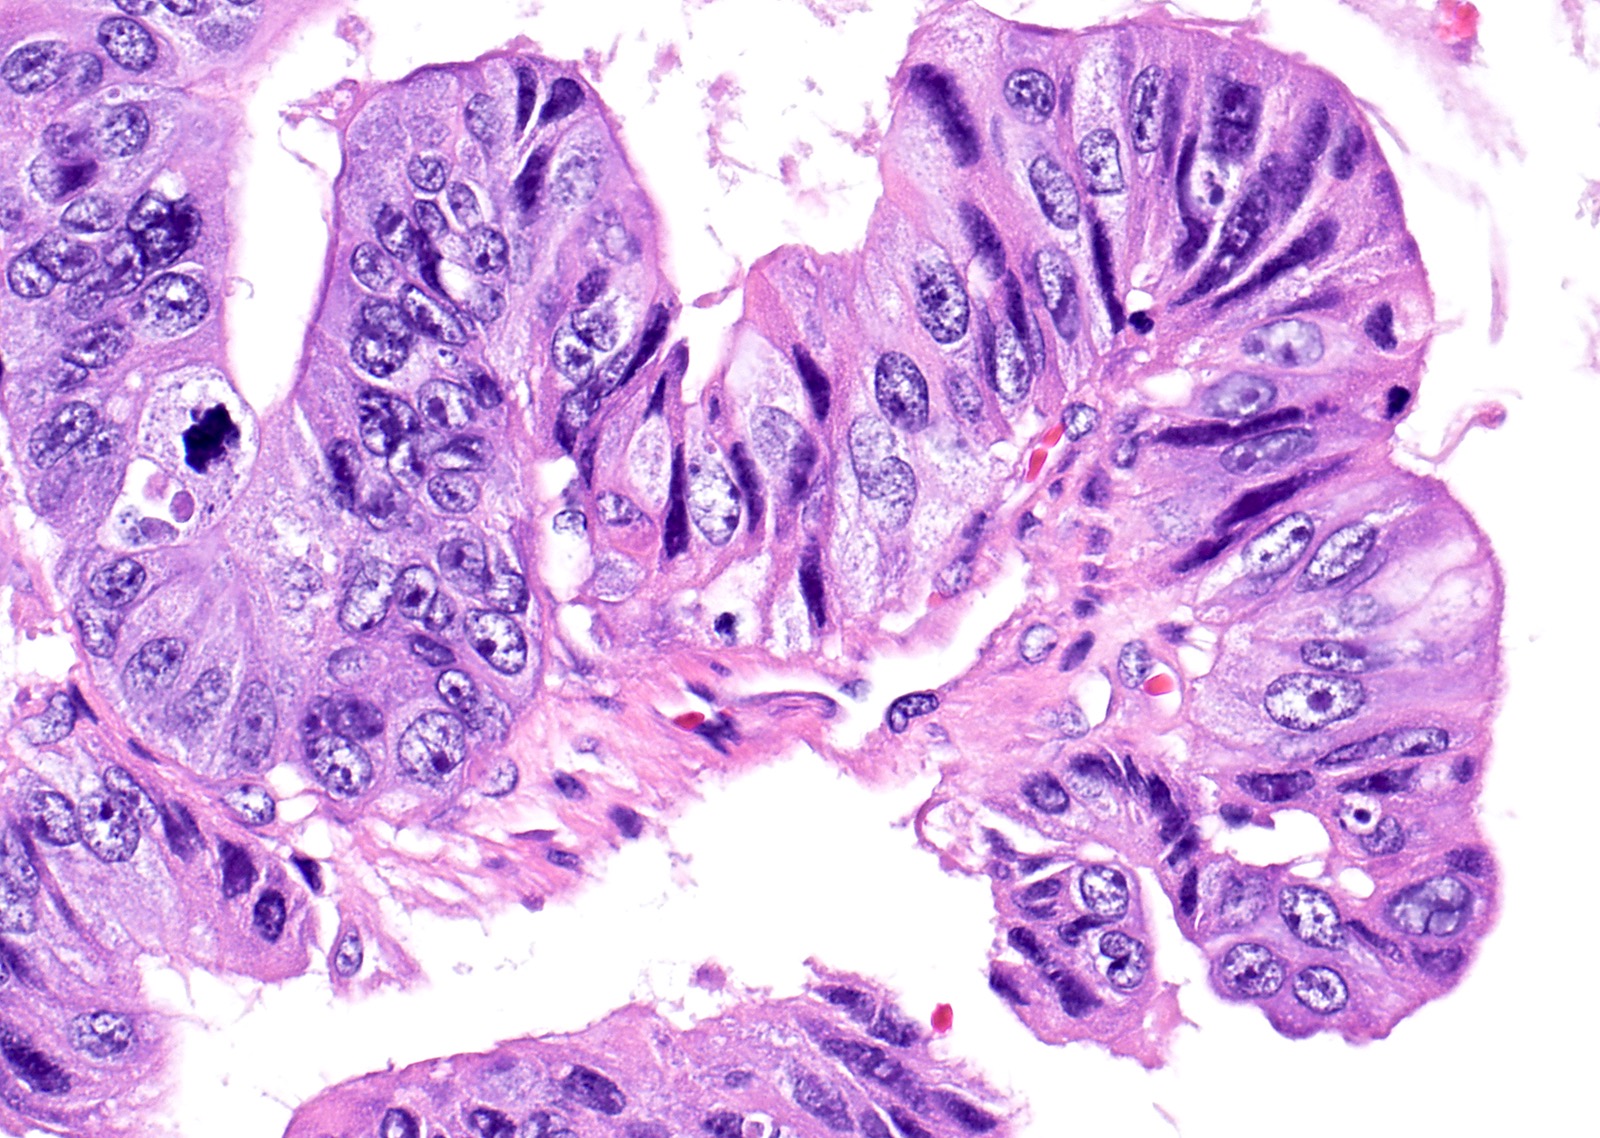 Intraepithelial carcinoma